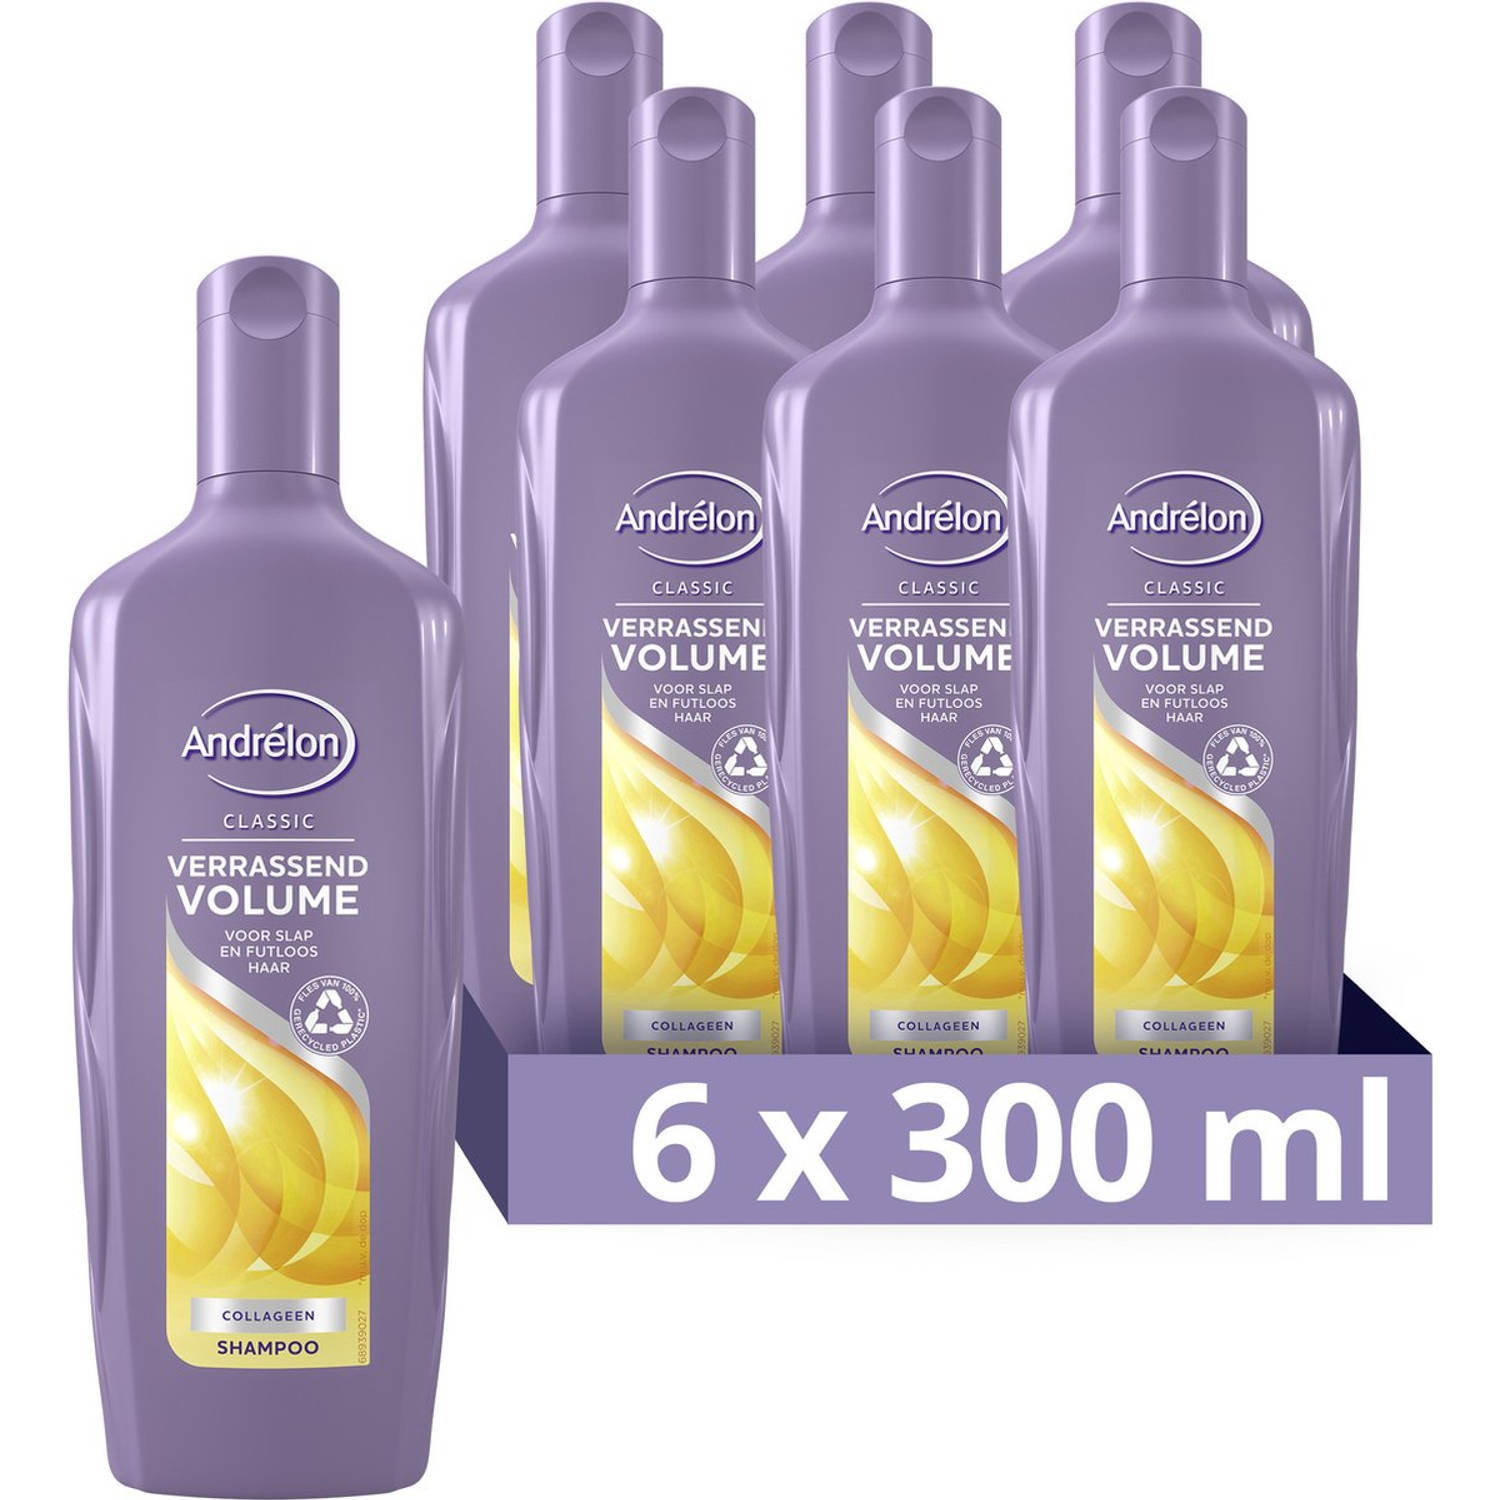 Andrelon Shampoo – Verrassend Volume 300 ml - 6 stuks